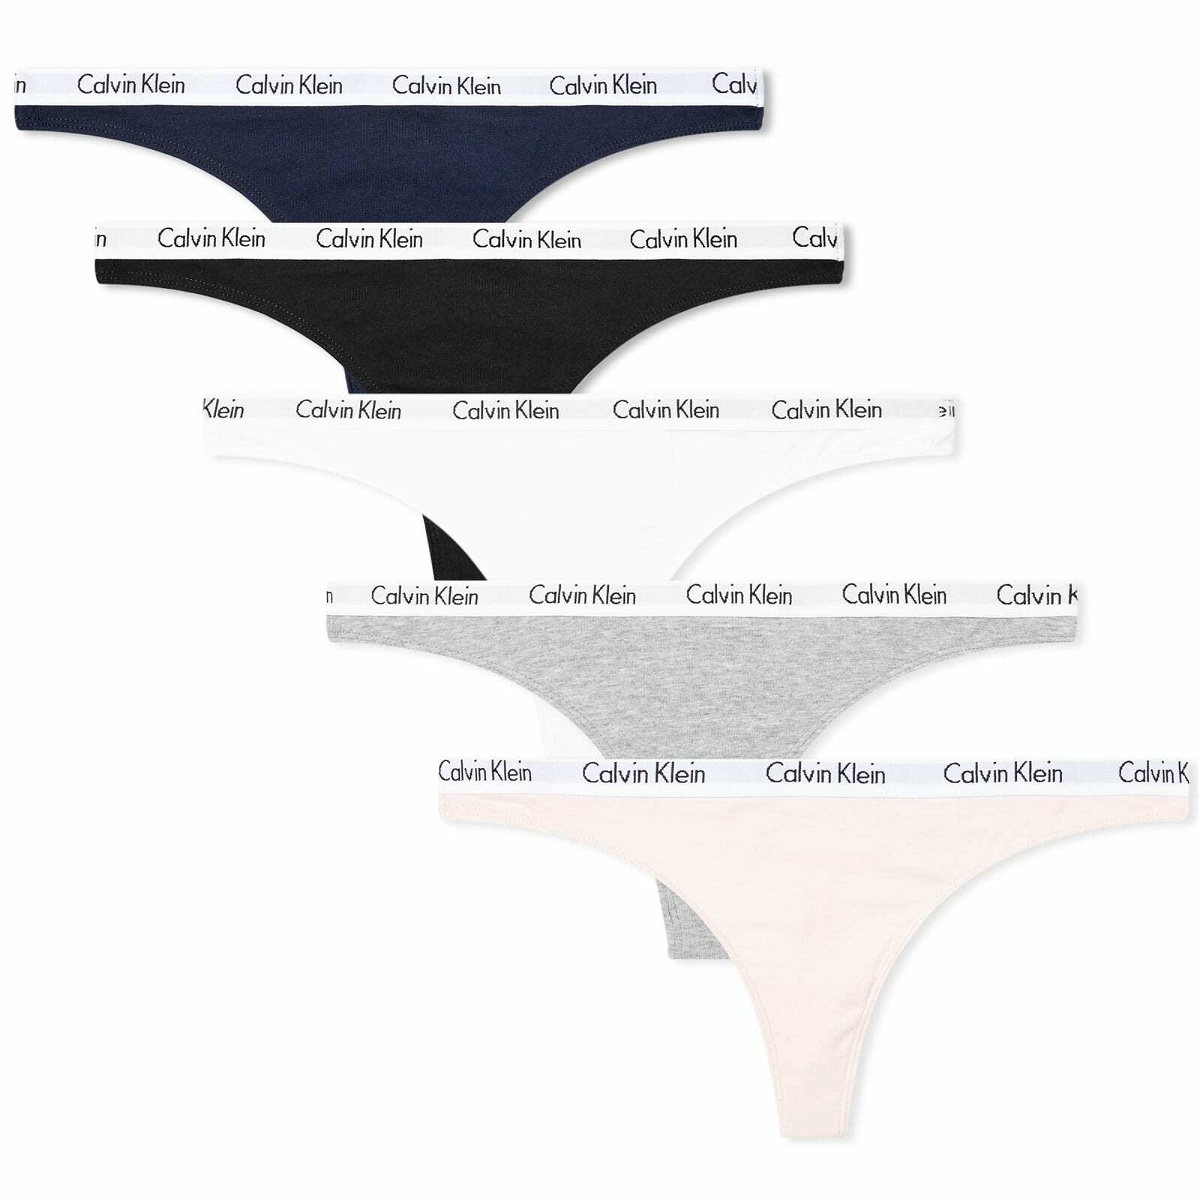 Calvin Klein Thongs For Women